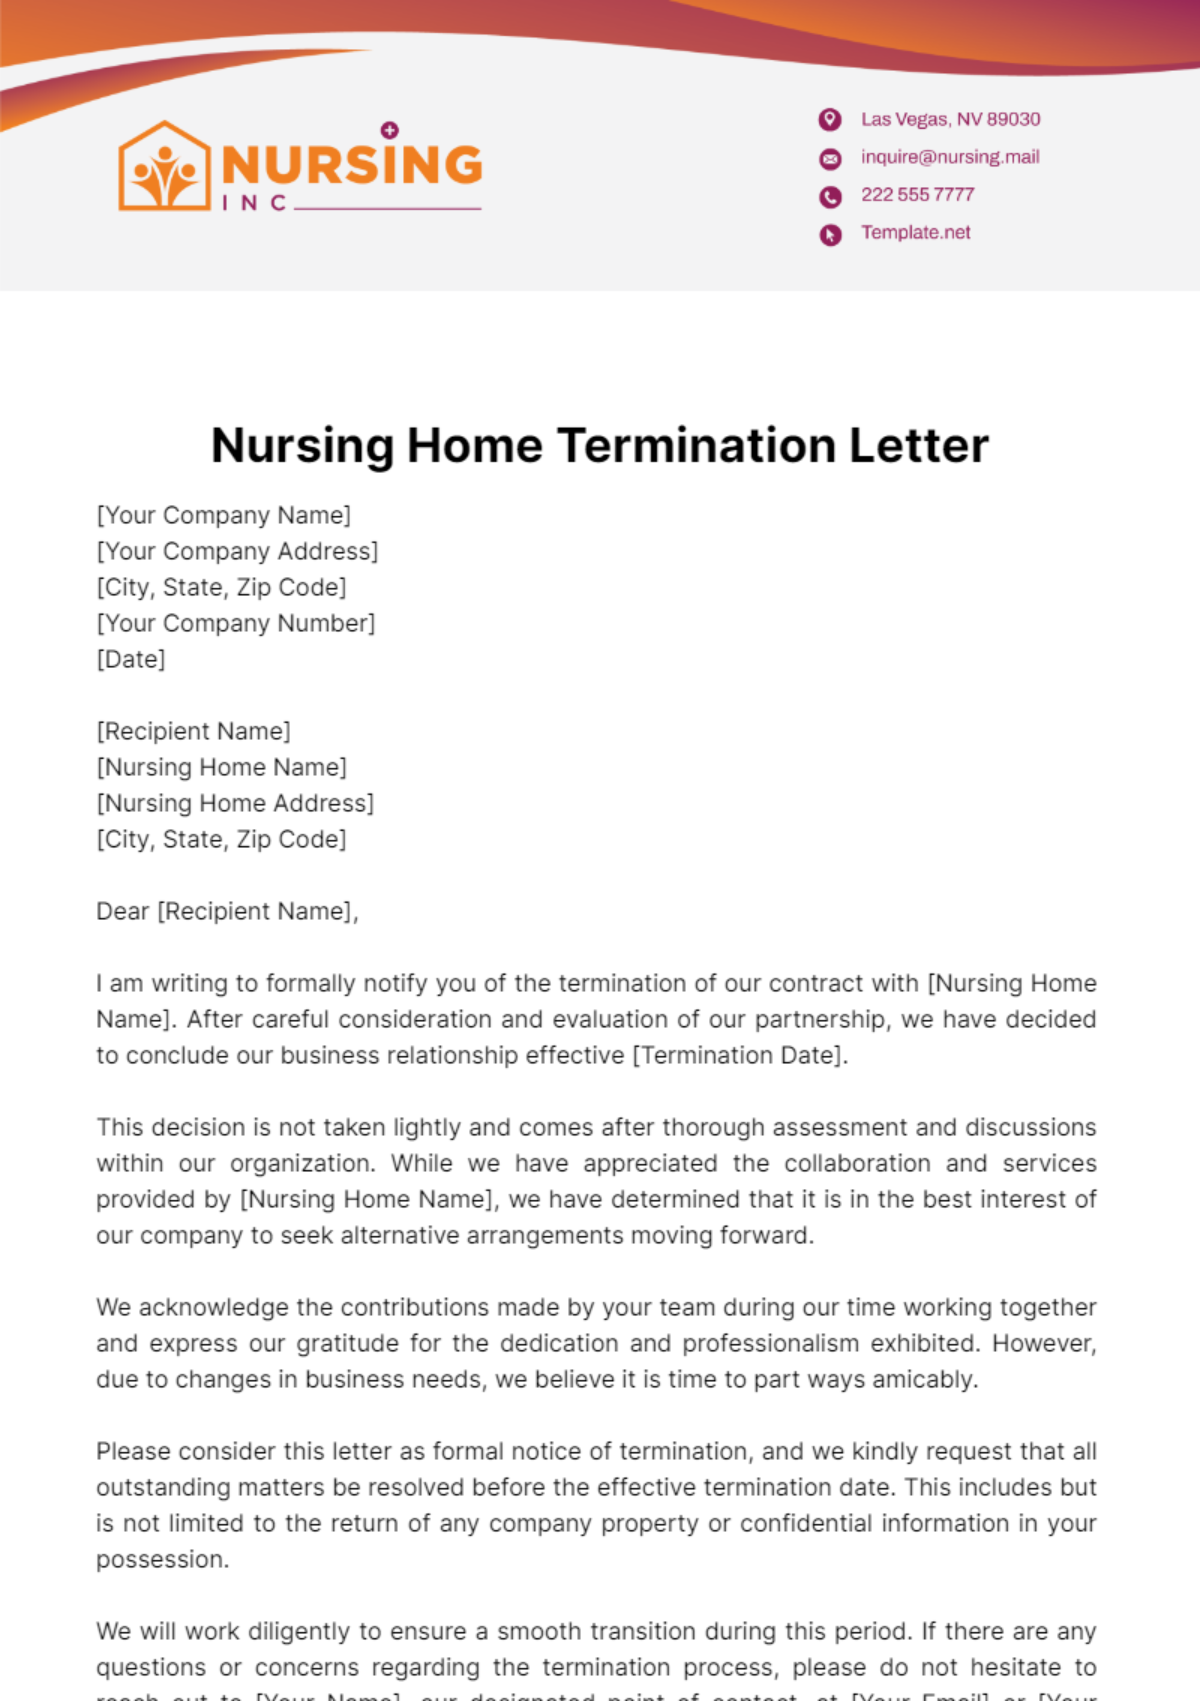 Nursing Home Termination Letter Template